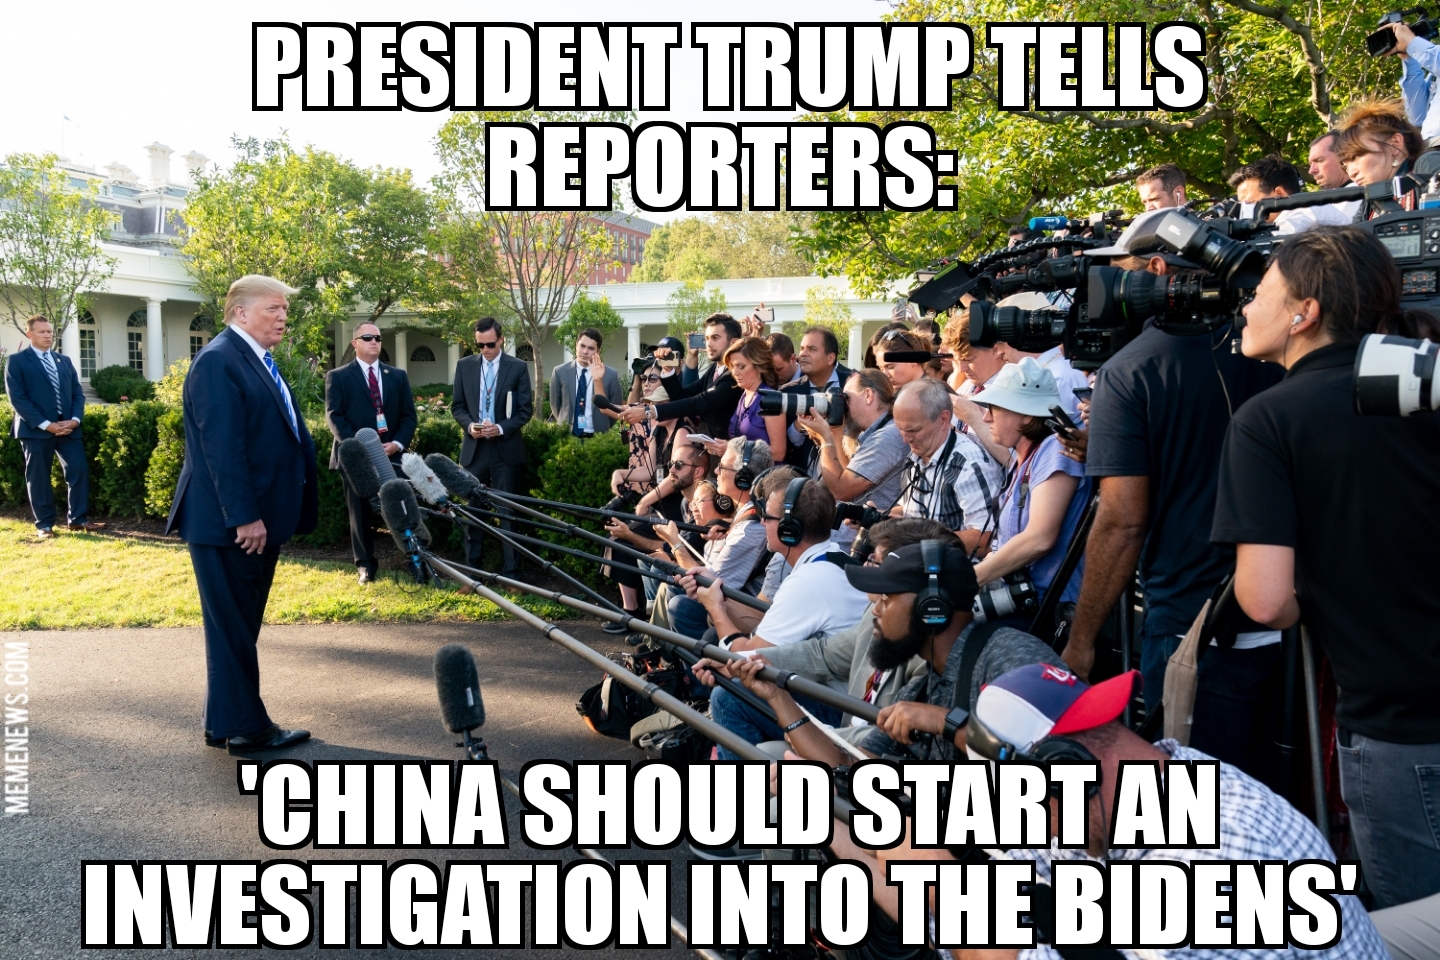 Trump says China should investigate Bidens